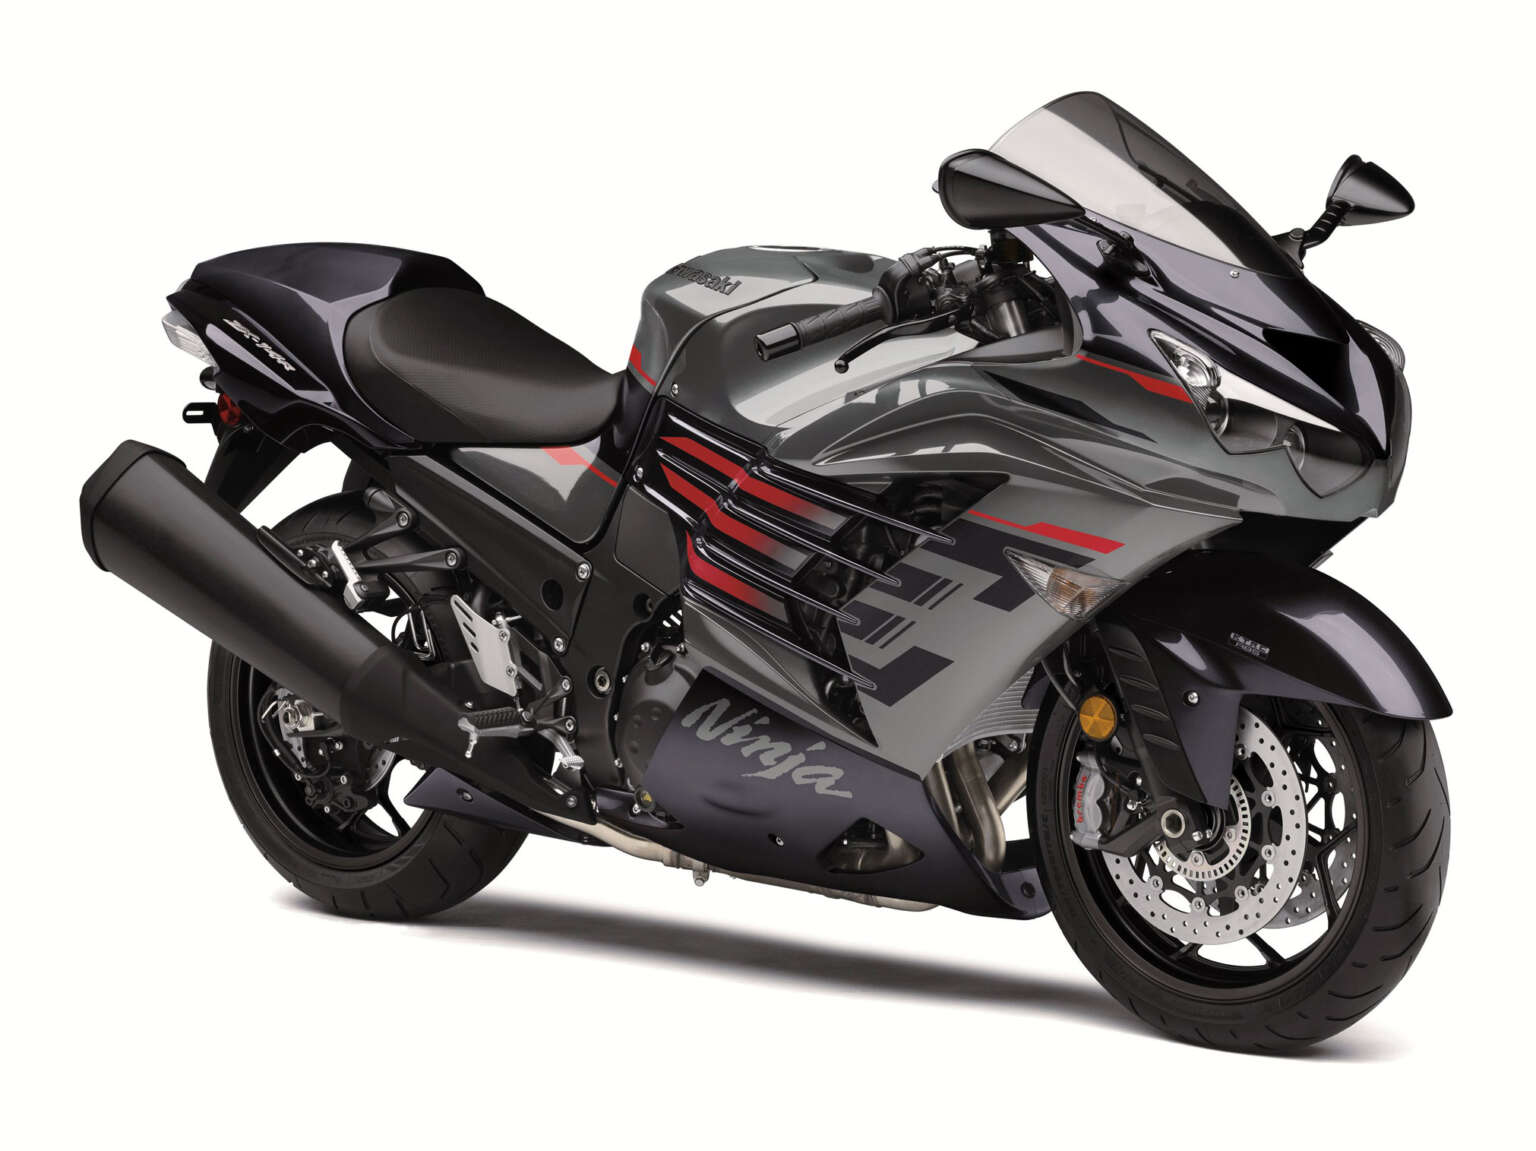 The 2022 Kawasaki Motorcycle Lineup + Our Take On Each Model - webBikeWorld